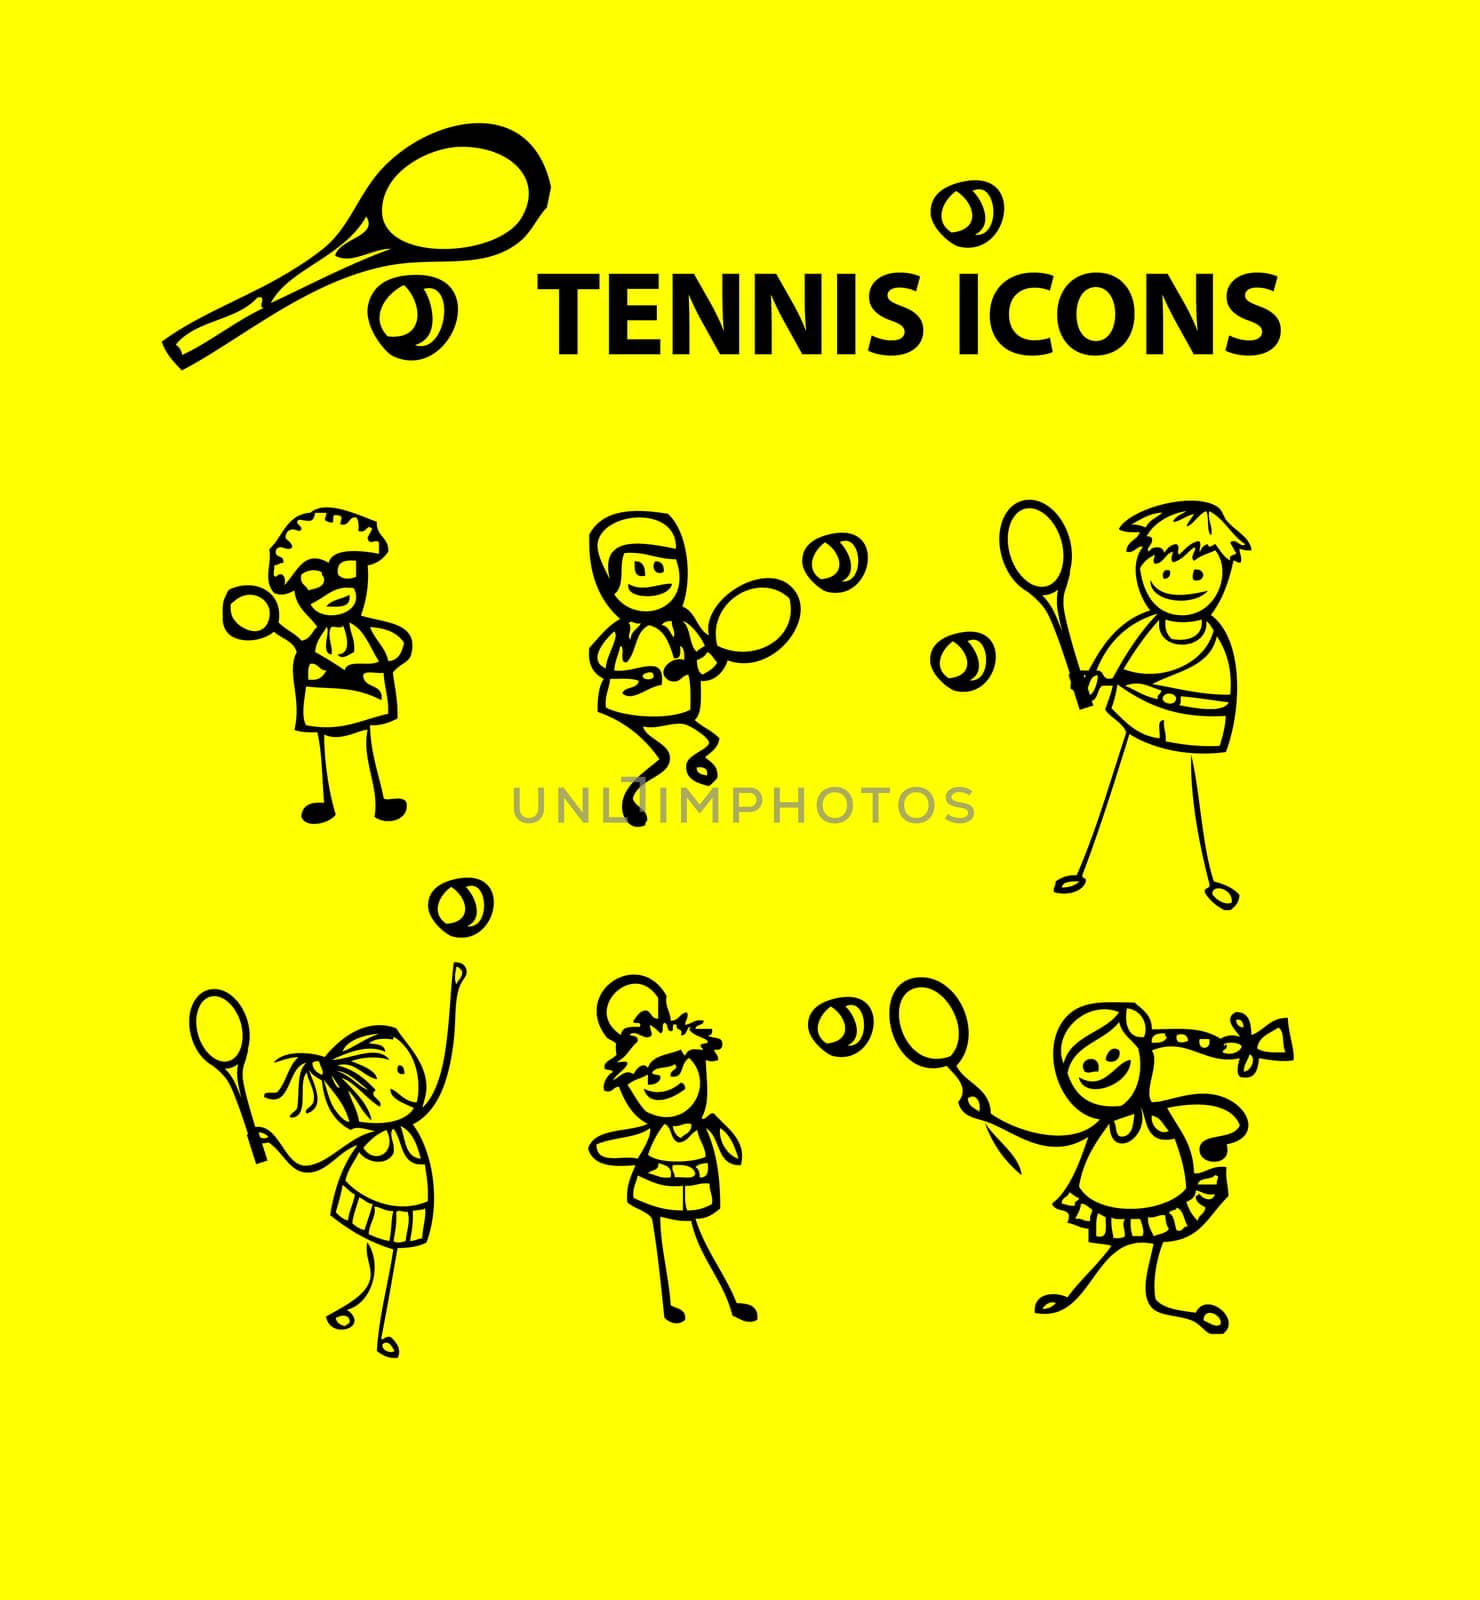 Tennis icons, yellow fake cartoon sport emblems